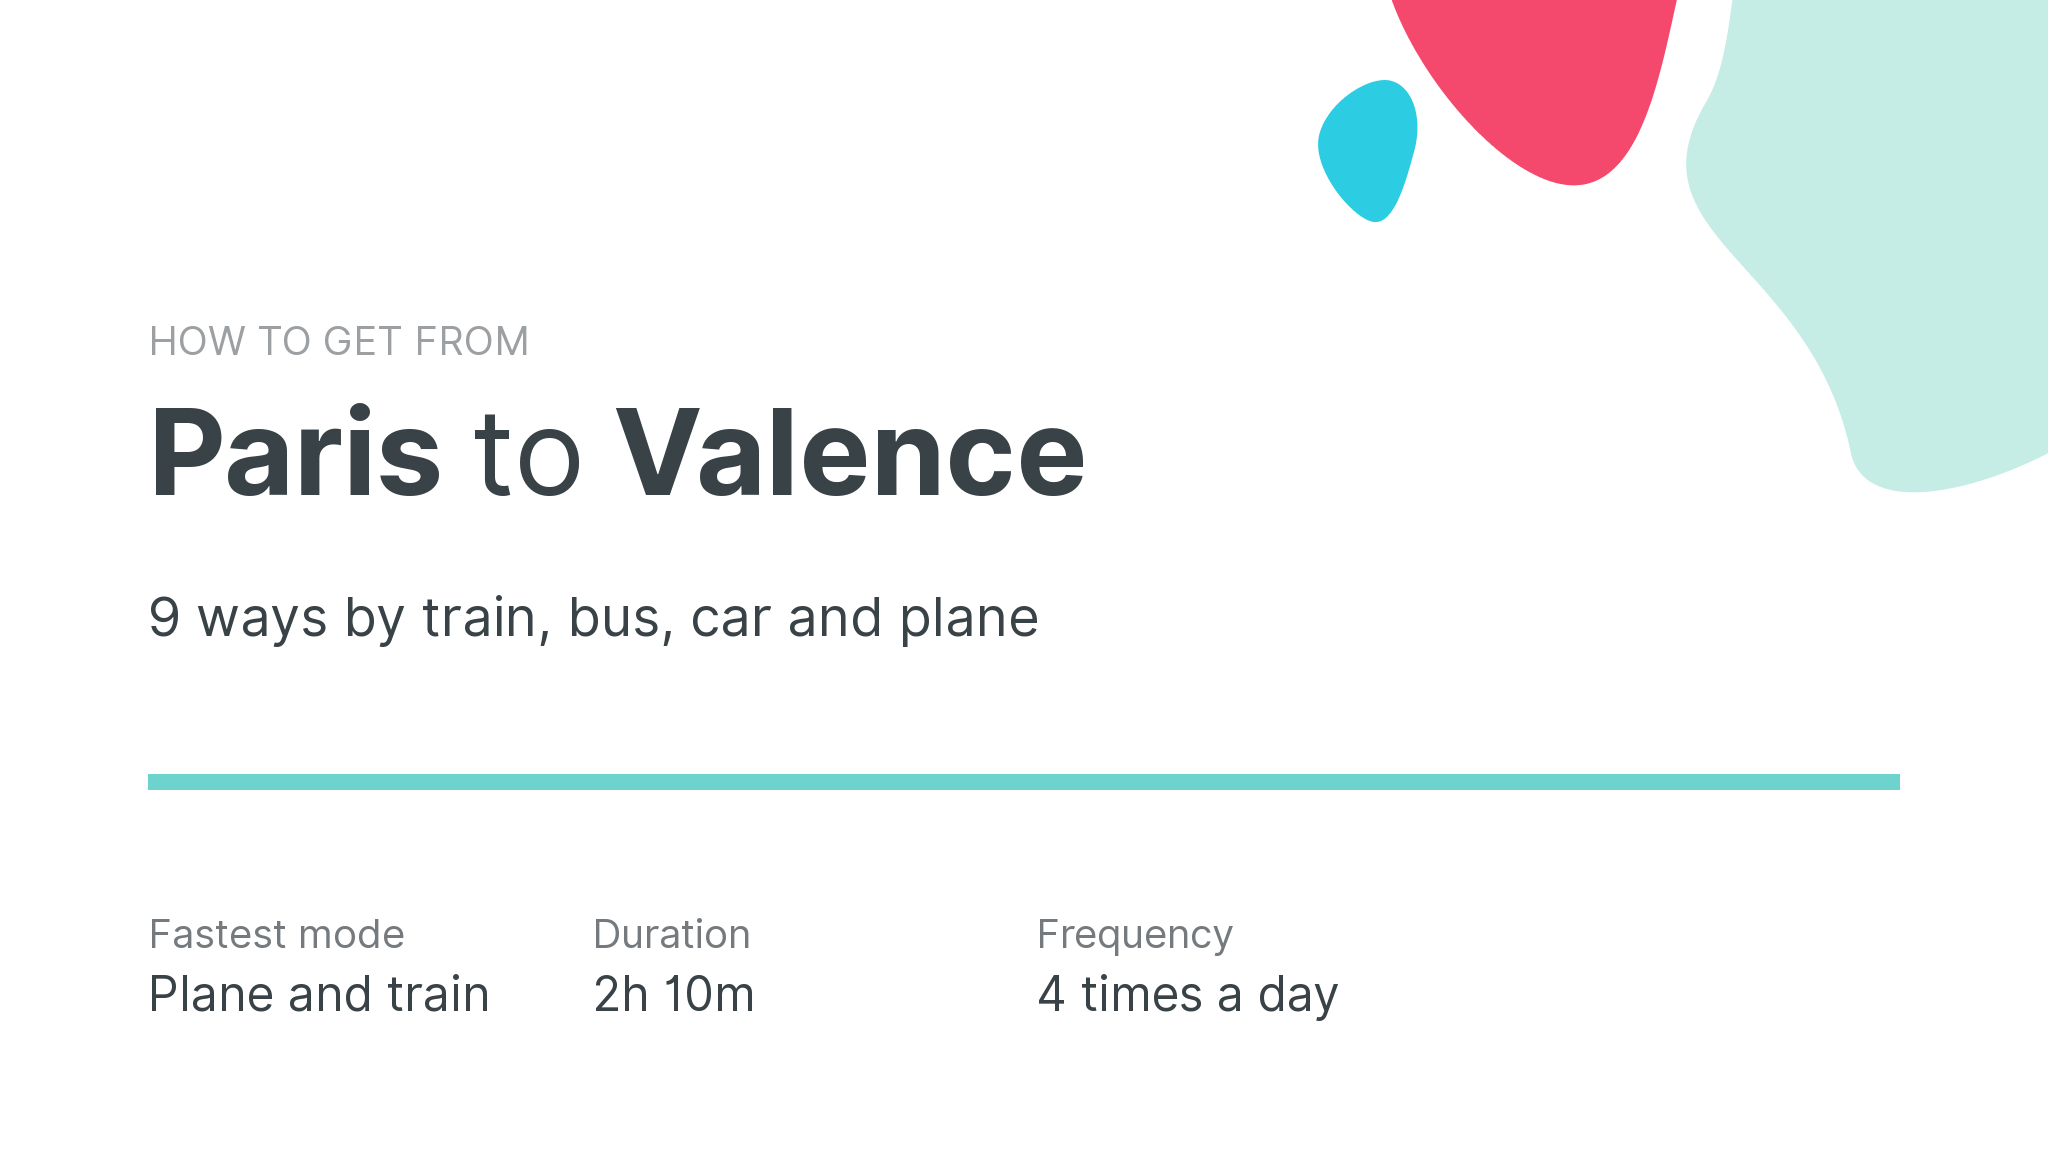 How do I get from Paris to Valence